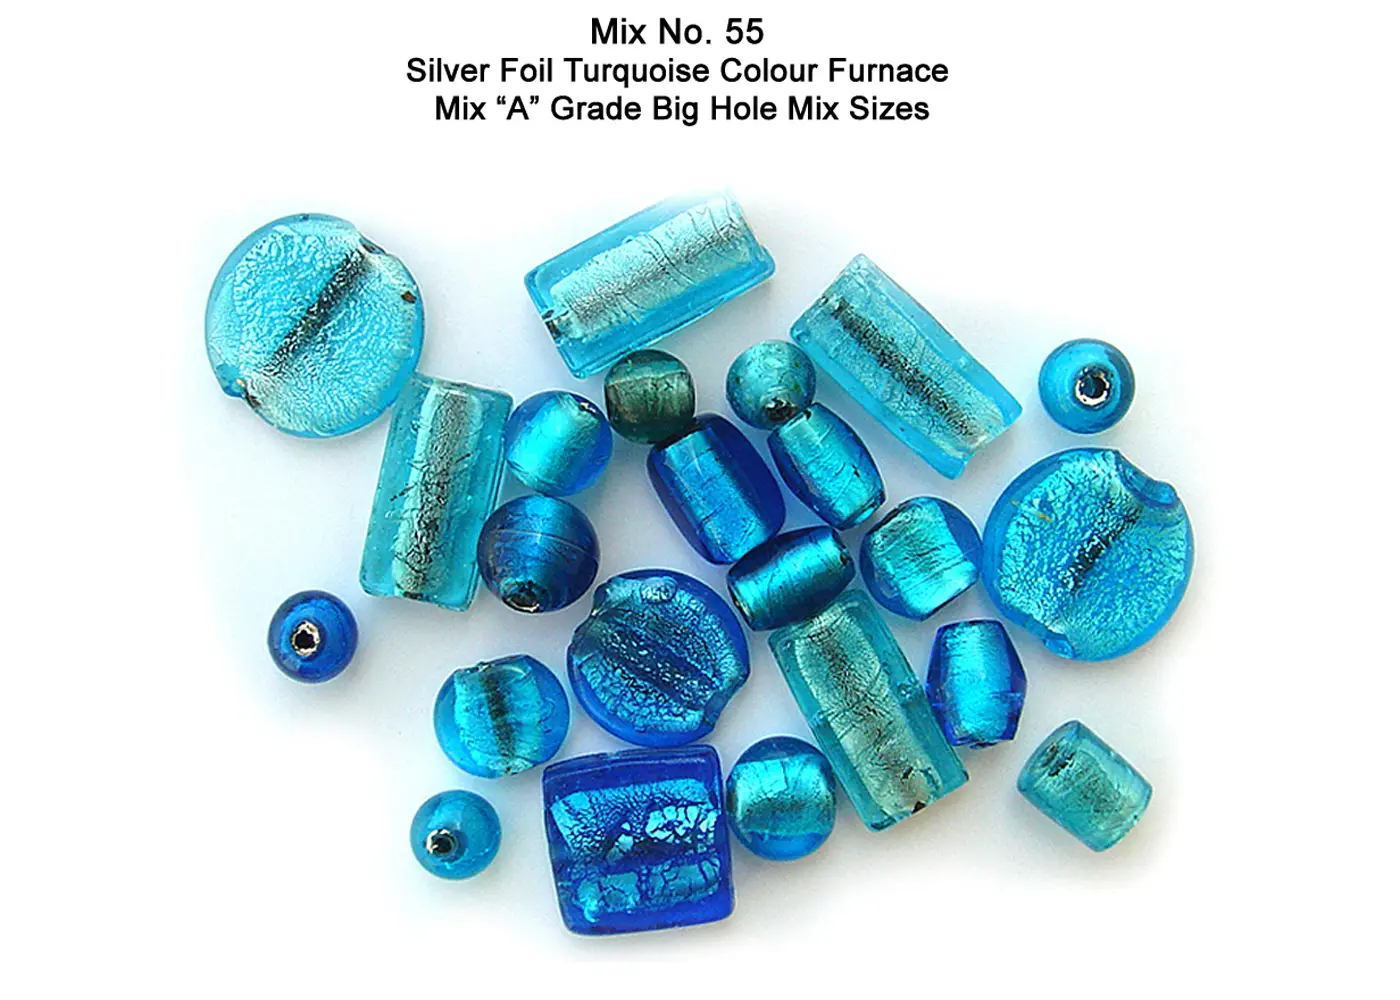 Silver Foil Turquoise Color Furnace Mix "A" Grade Big Hole mix sizes